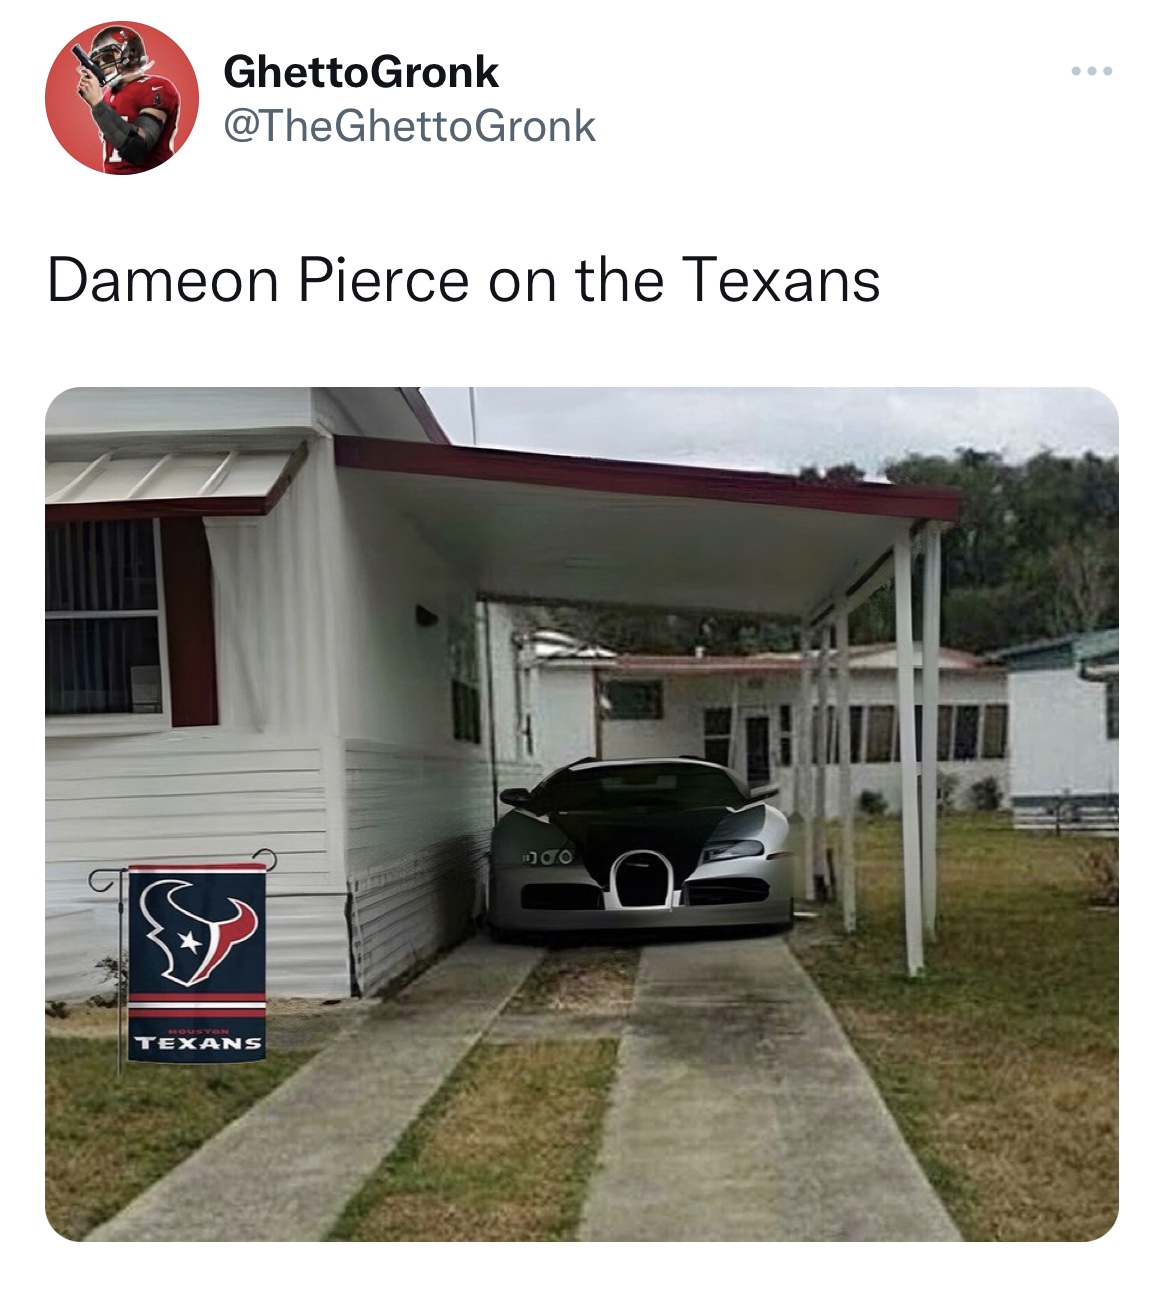 Tweets roasting celebs - bugatti in trailer park - Ghetto Gronk Gronk Dameon Pierce on the Texans Texans